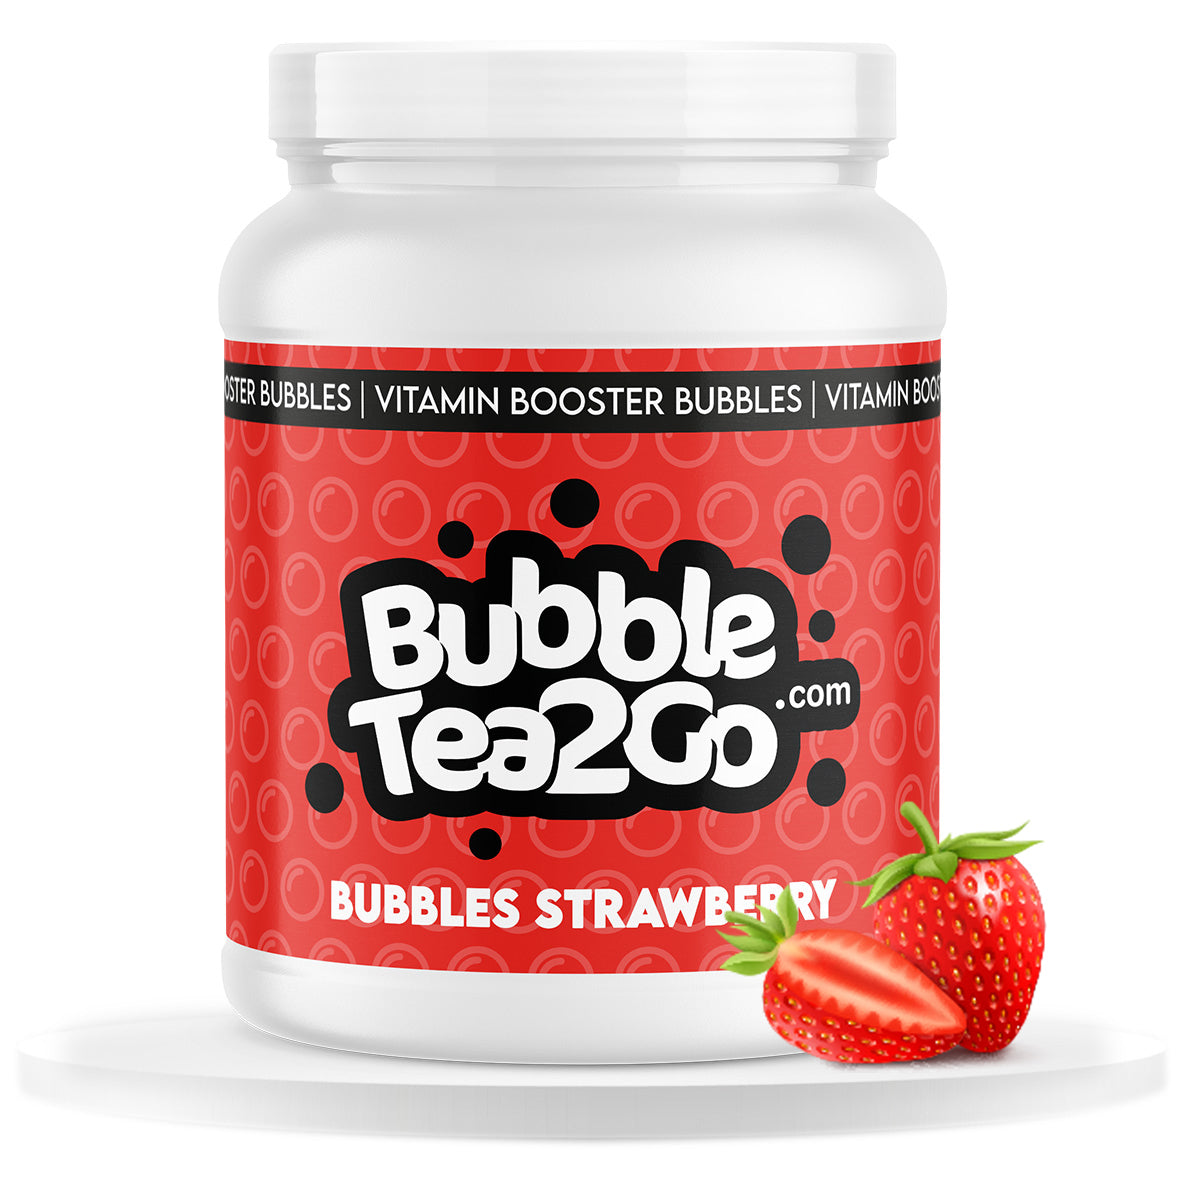 Bubbles gastronomy - Strawberry (1.2 kg)